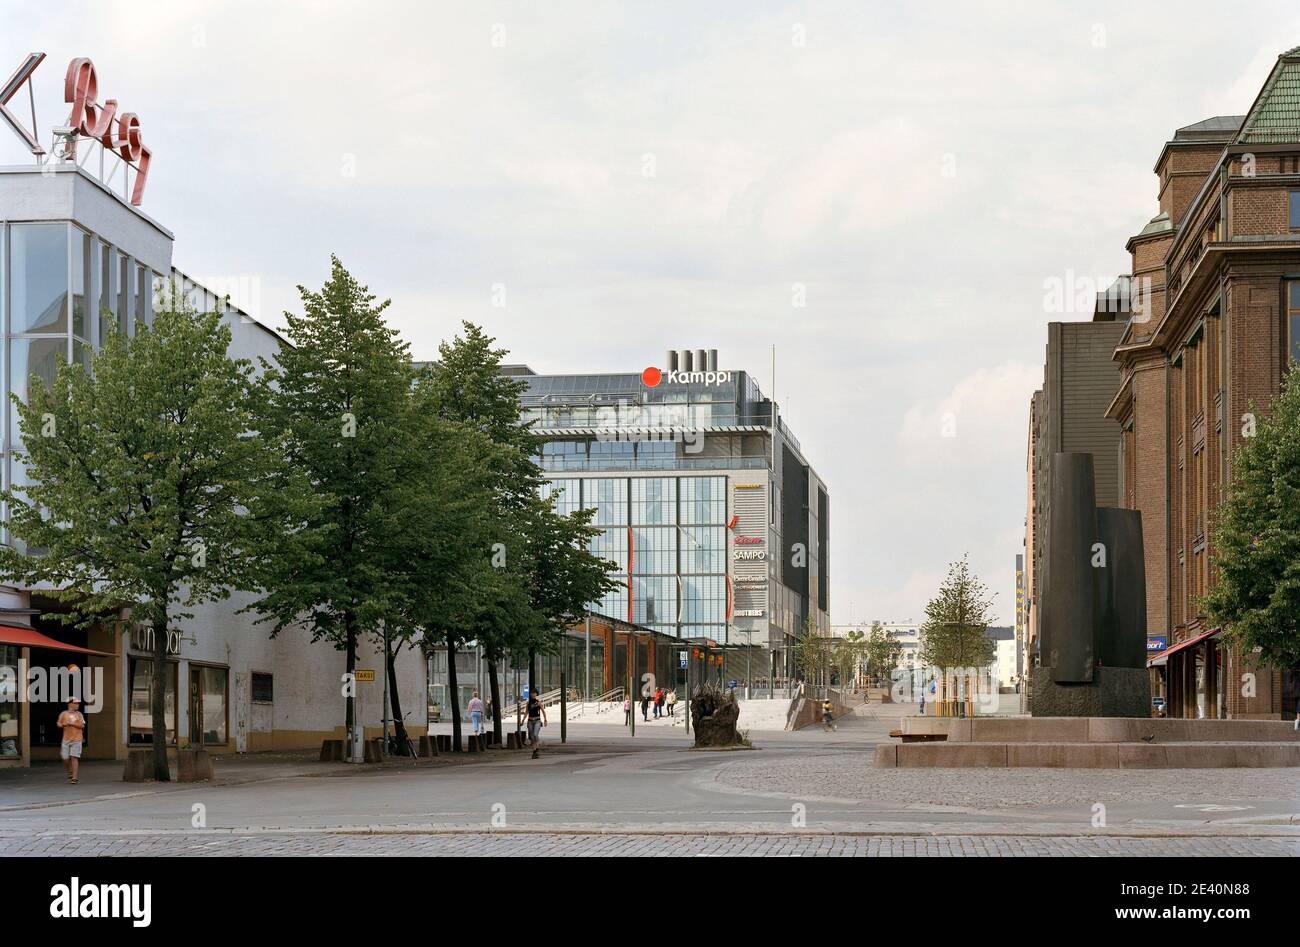 Kamppi Center Helsinki, Architects: Helin & Co Architects, Juhani Pallasmaa Architects, einkaufszentrum, shopping center, shopping centre, centro comm Stock Photo